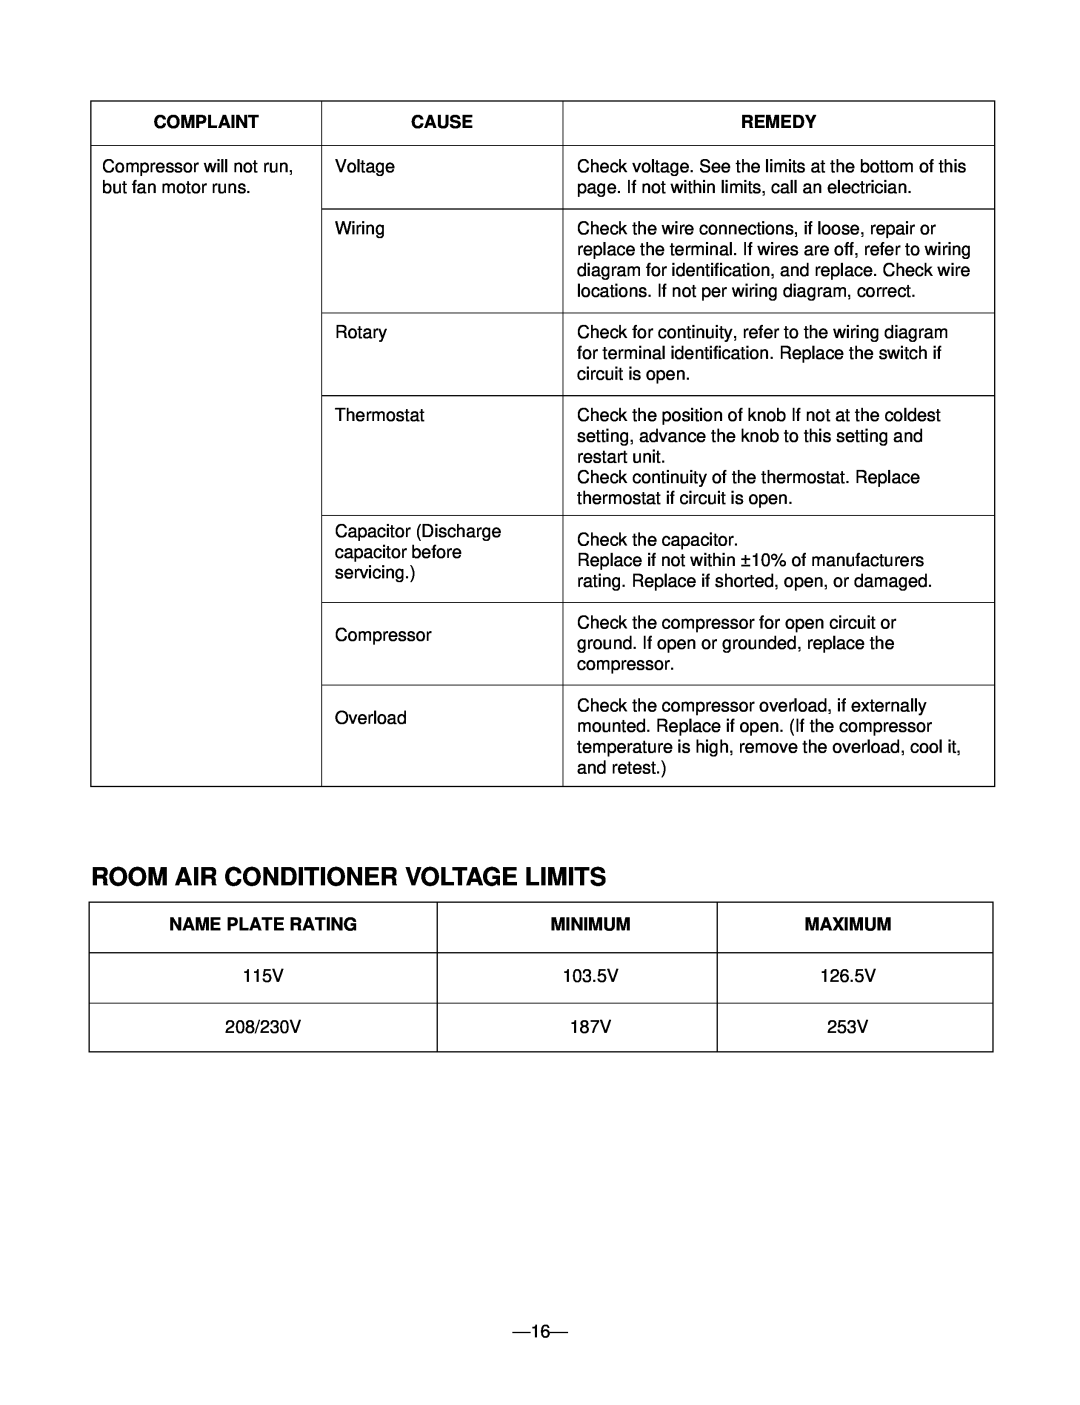 Friedrich UE10, UE12 Room Air Conditioner Voltage Limits, Complaint, Cause, Remedy, Name Plate Rating, Minimum, Maximum 